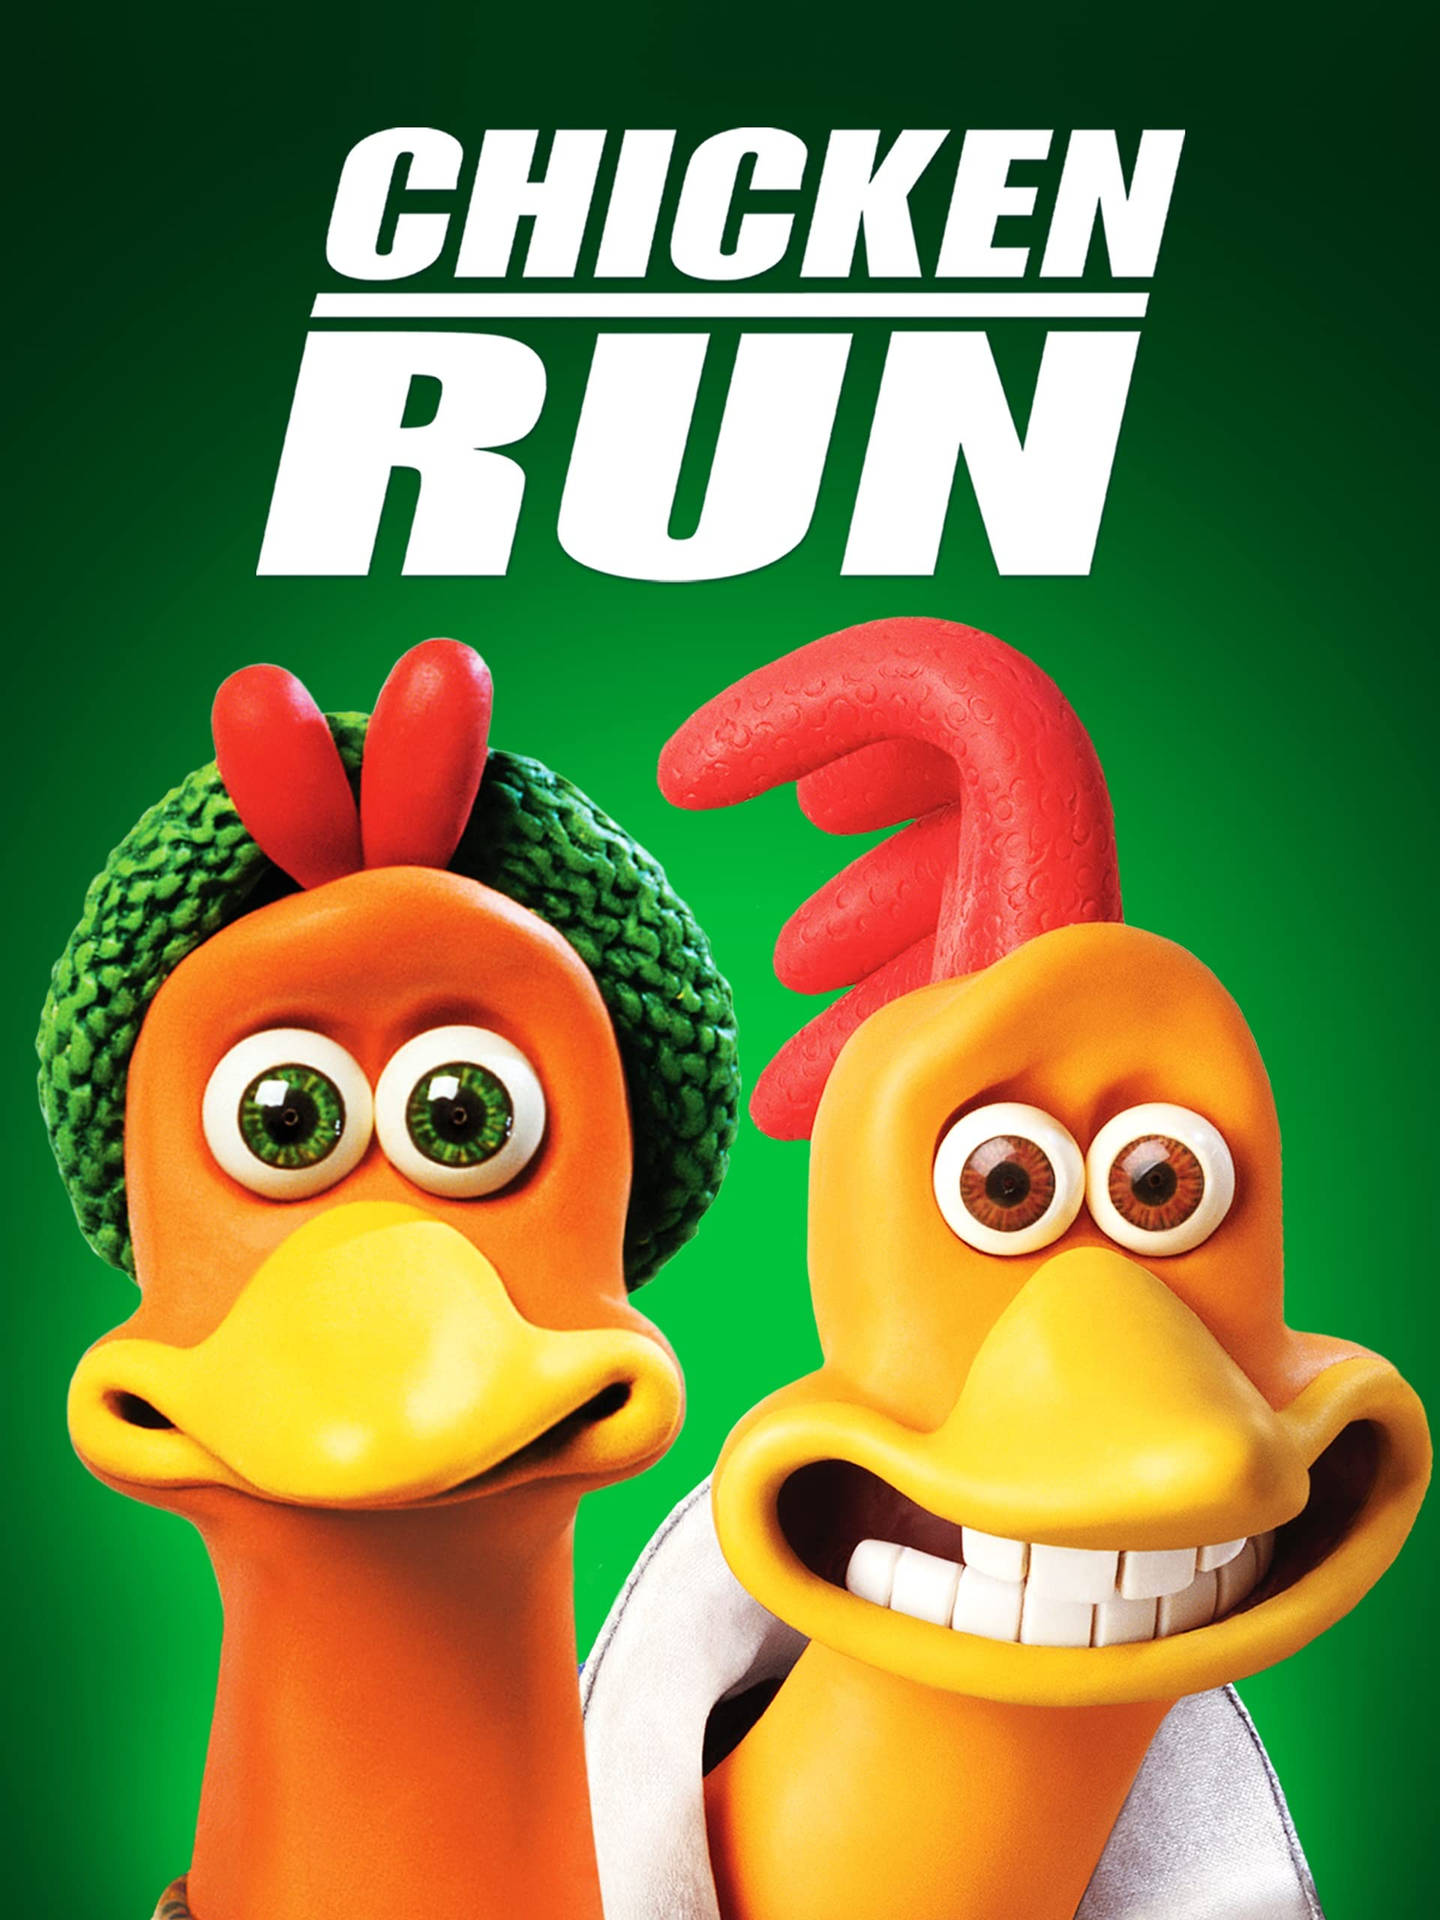 The Chicken Run Movie Poster Wallpaper